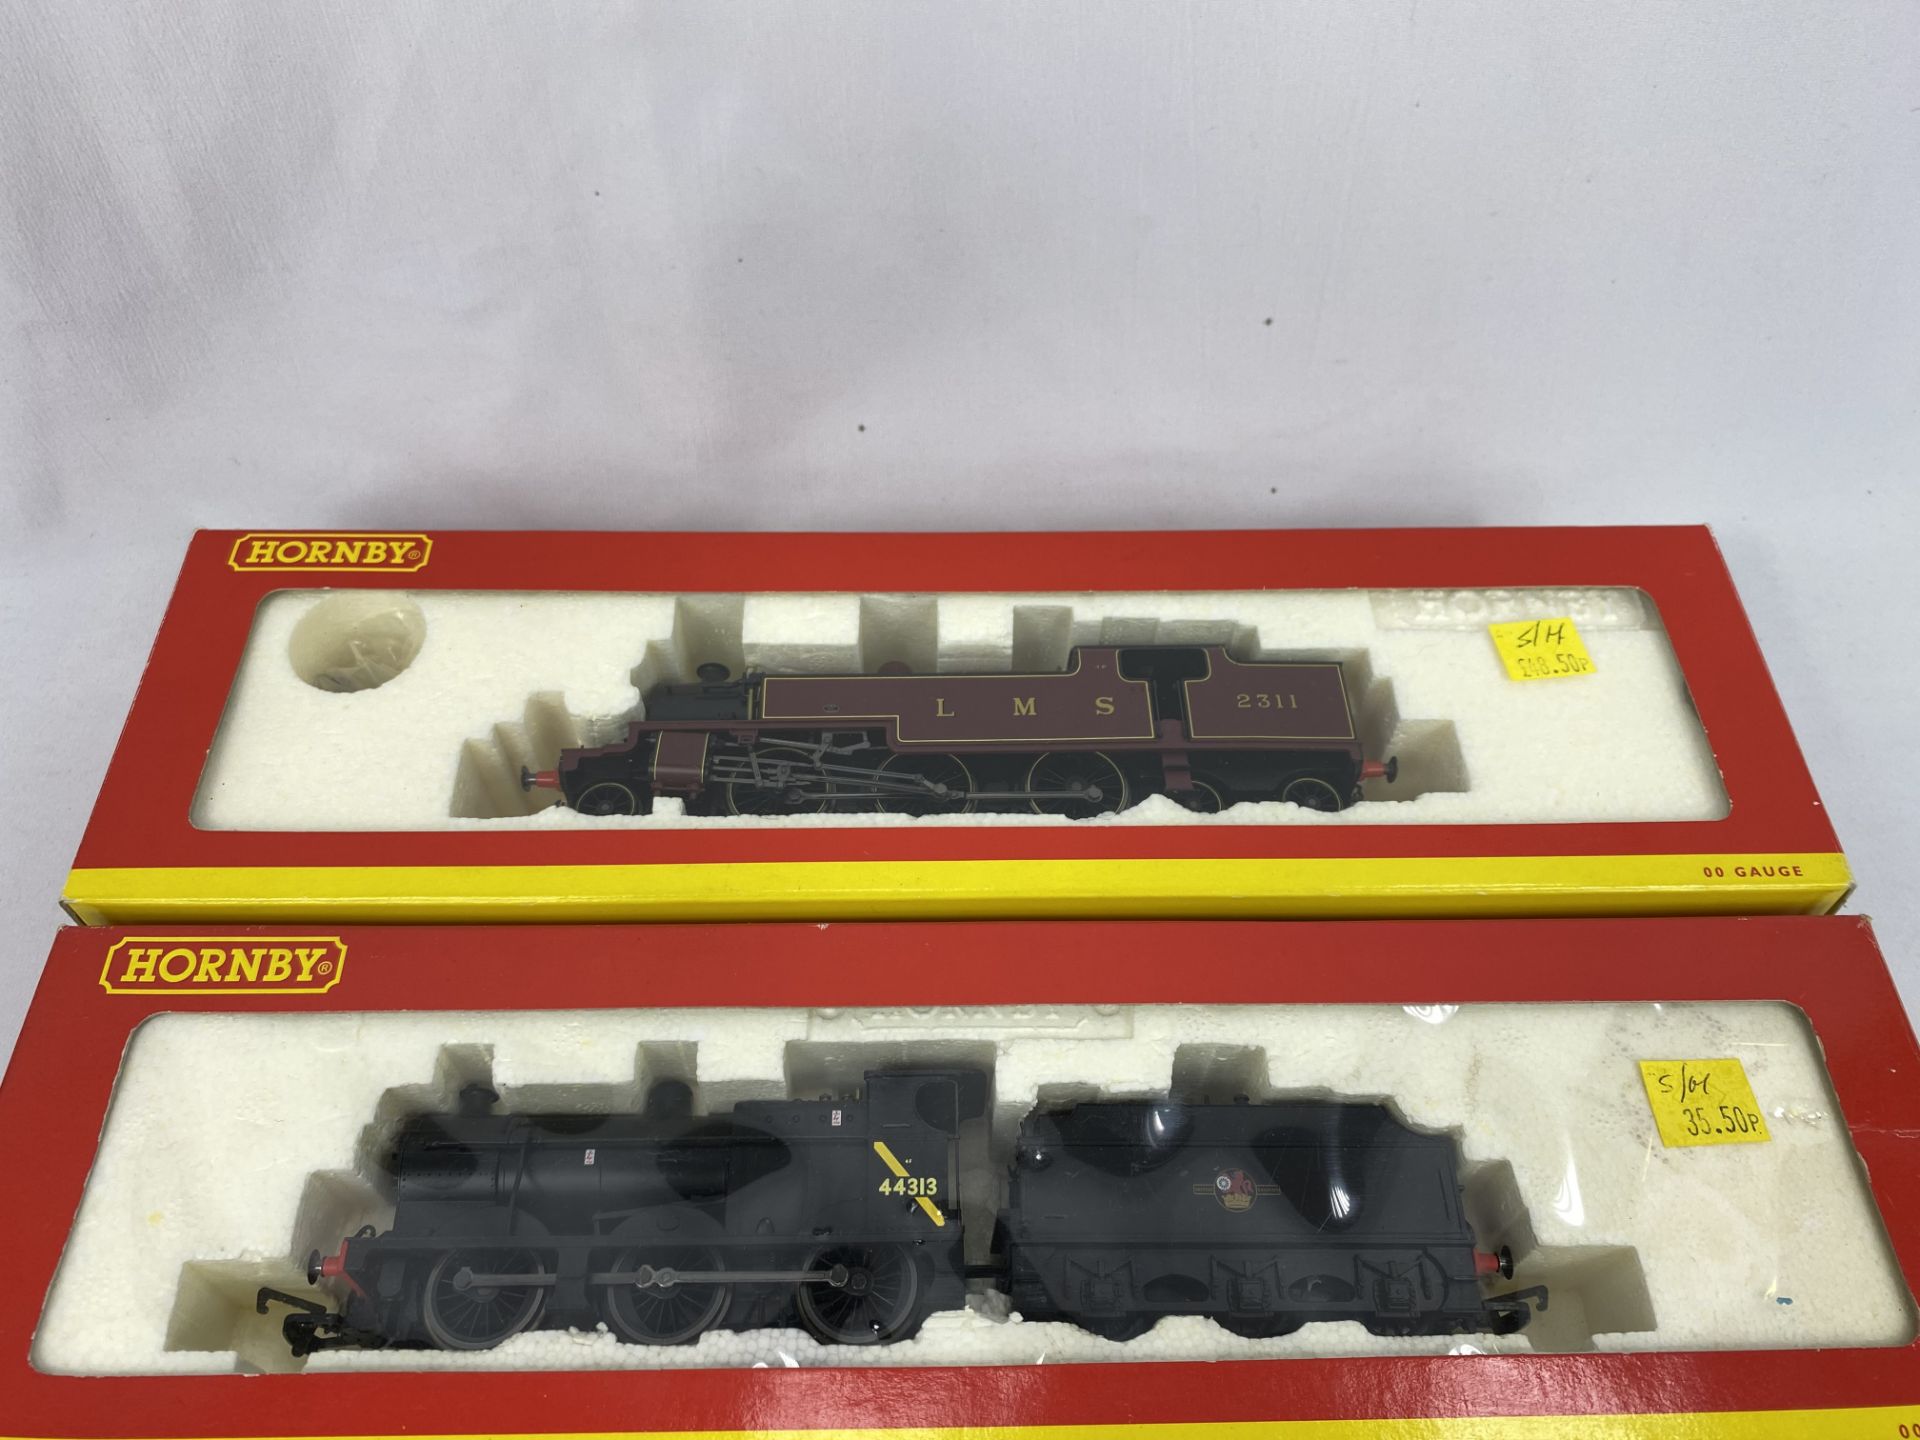 Three Hornby 00 gauge locomotive; together with a Bachmann 00 gauge locomotive. - Image 2 of 4